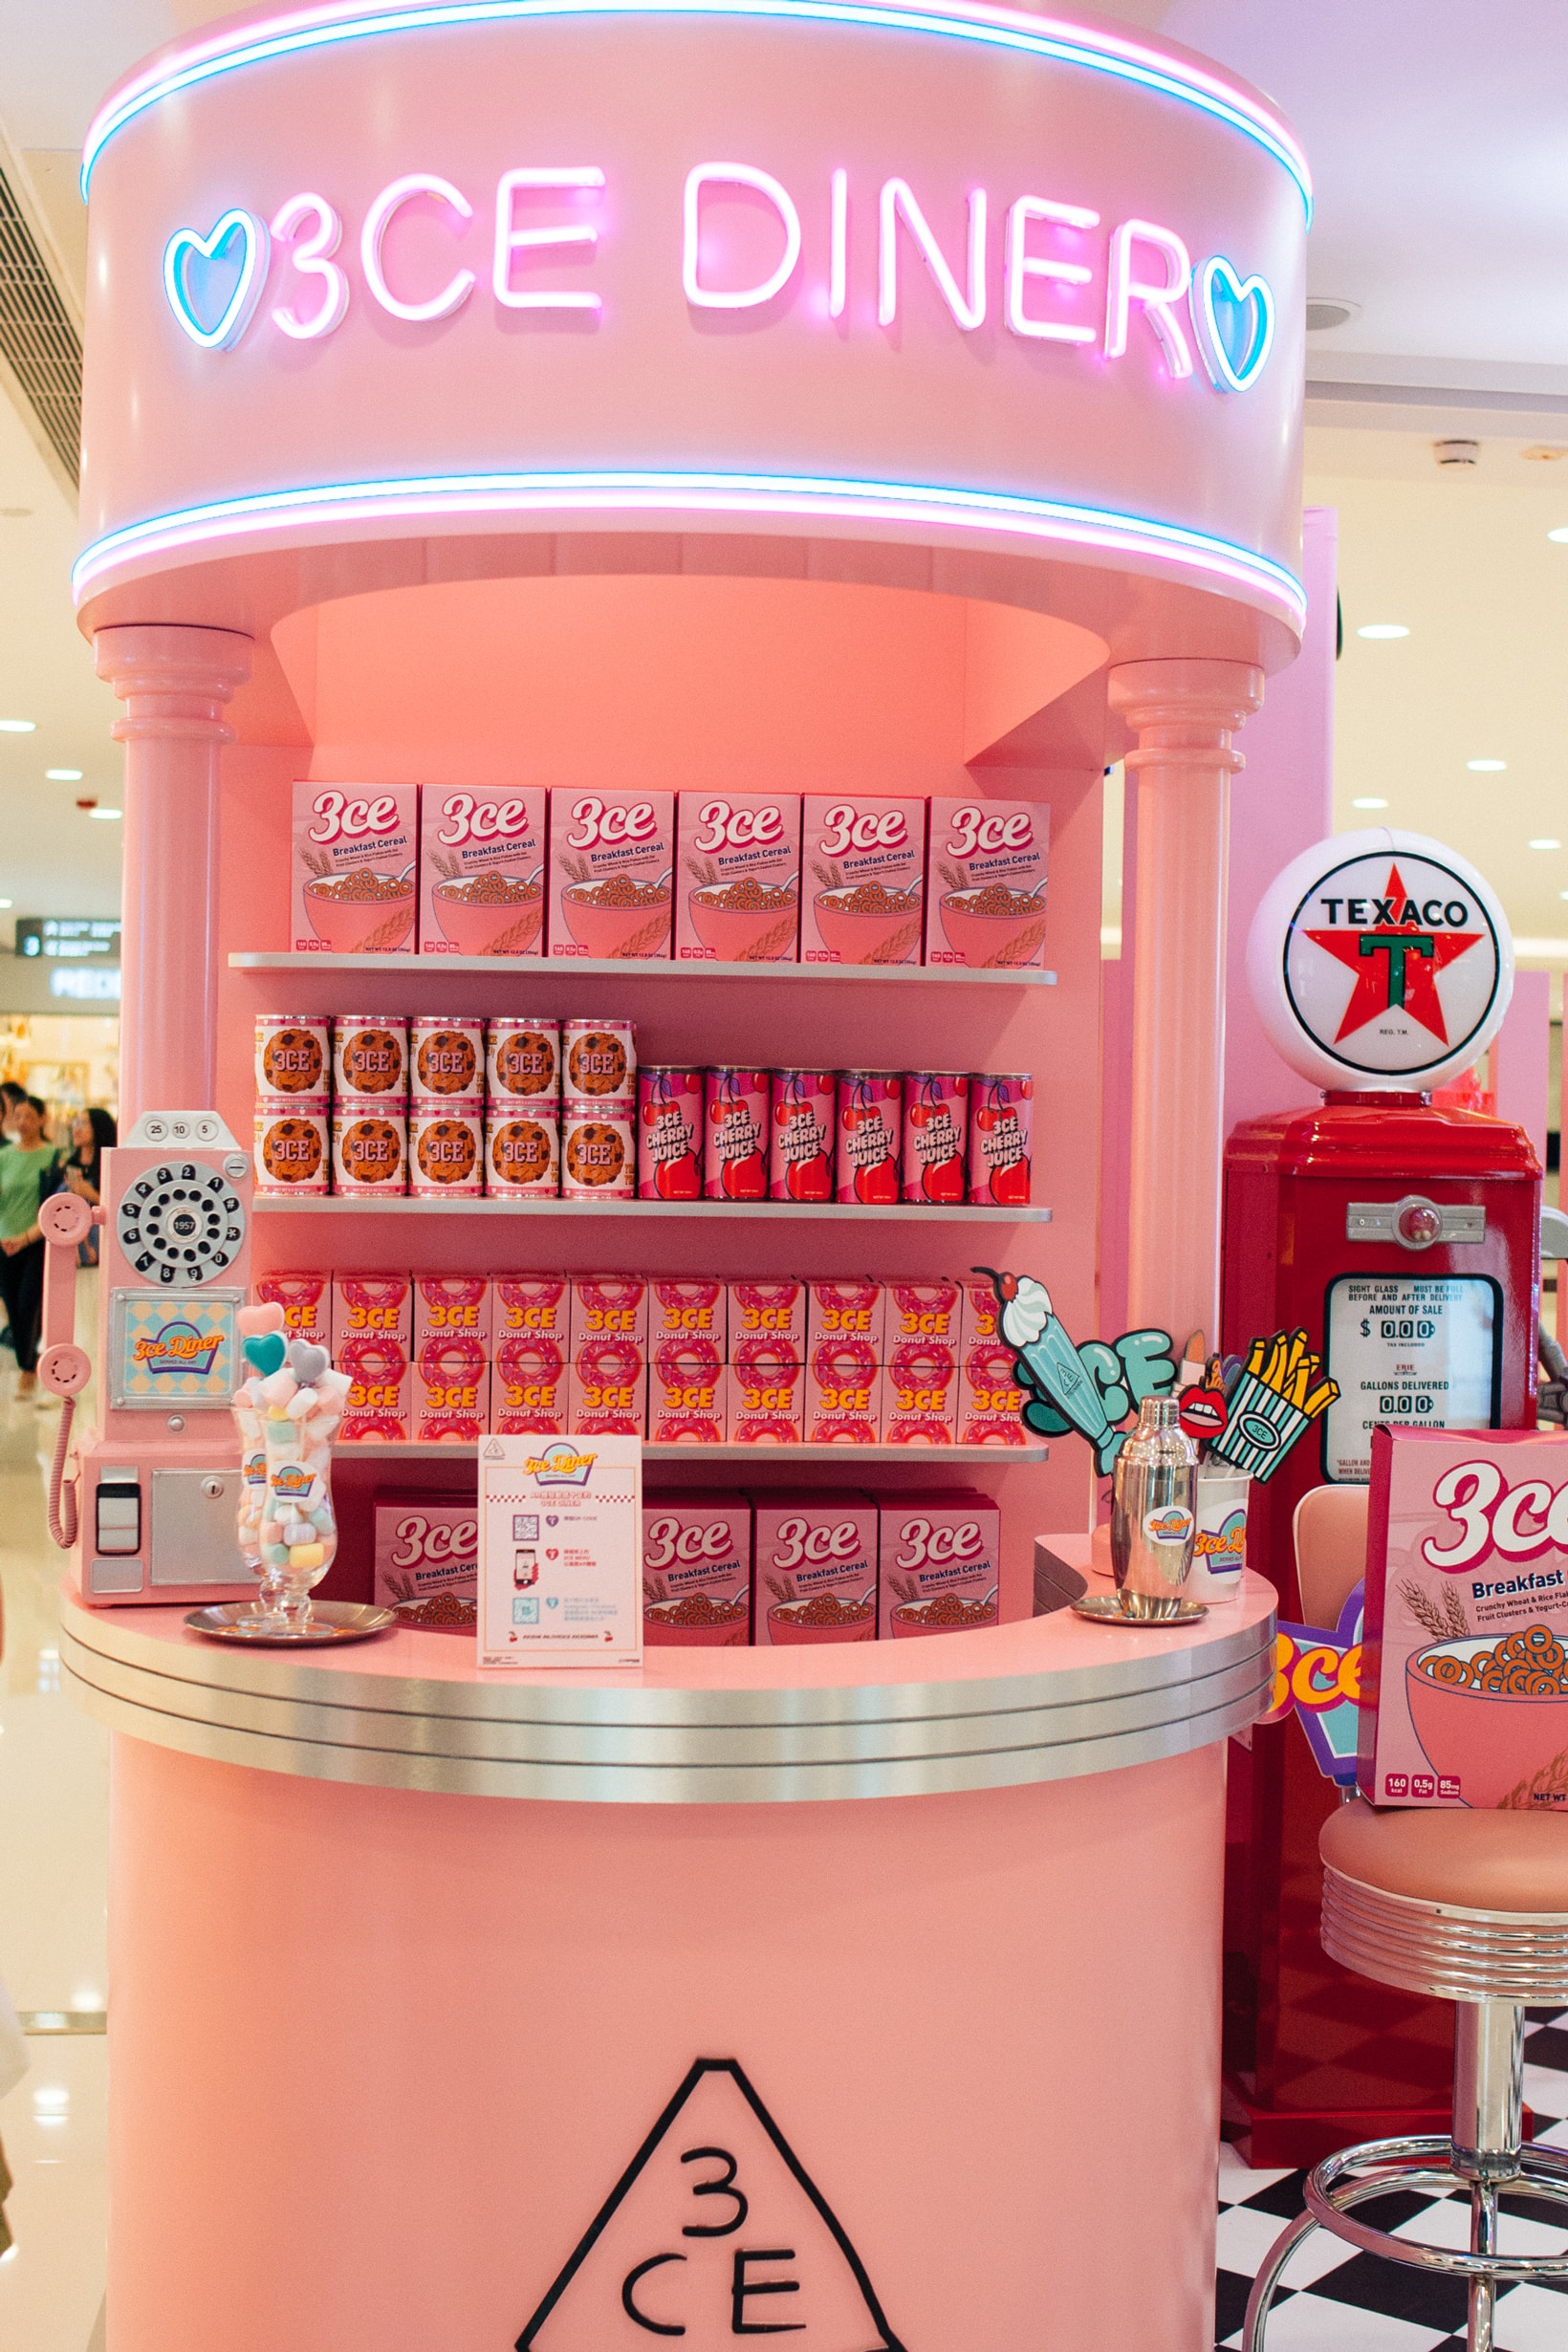 3CE Diner Pop Up Hong Kong Beauty Makeup Cereal Samples